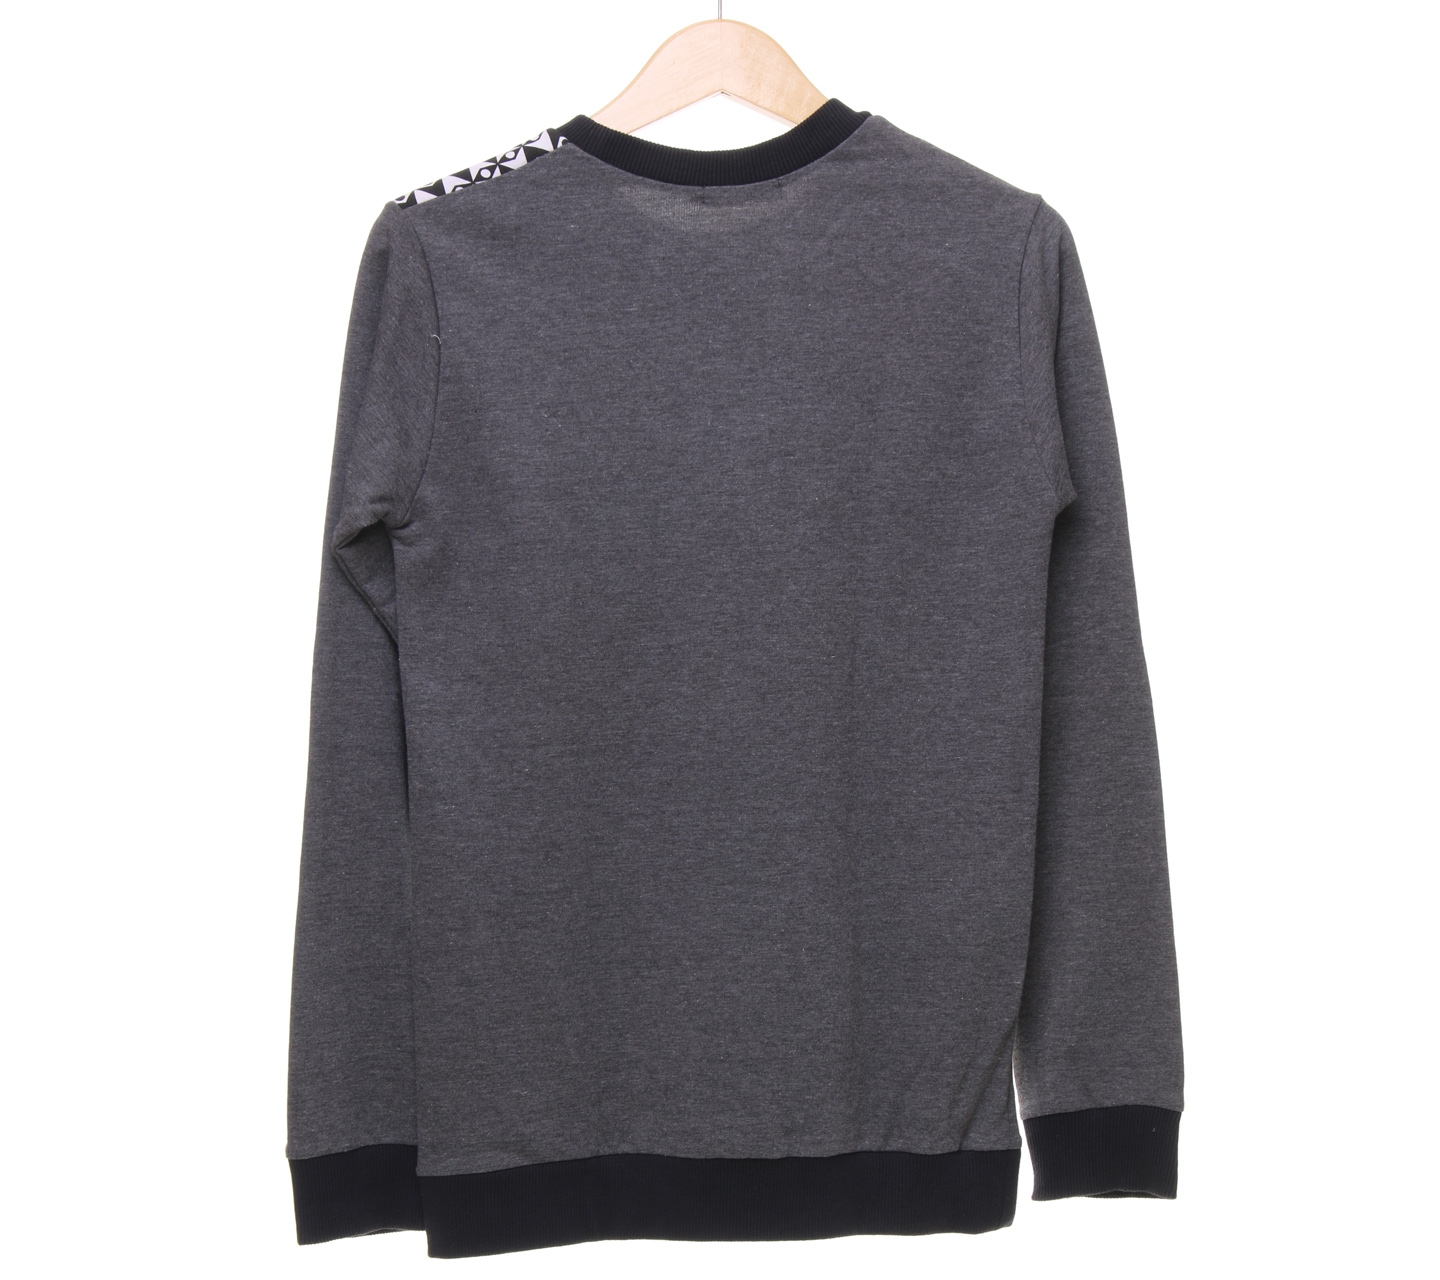 Monstore Dark Grey Sweater